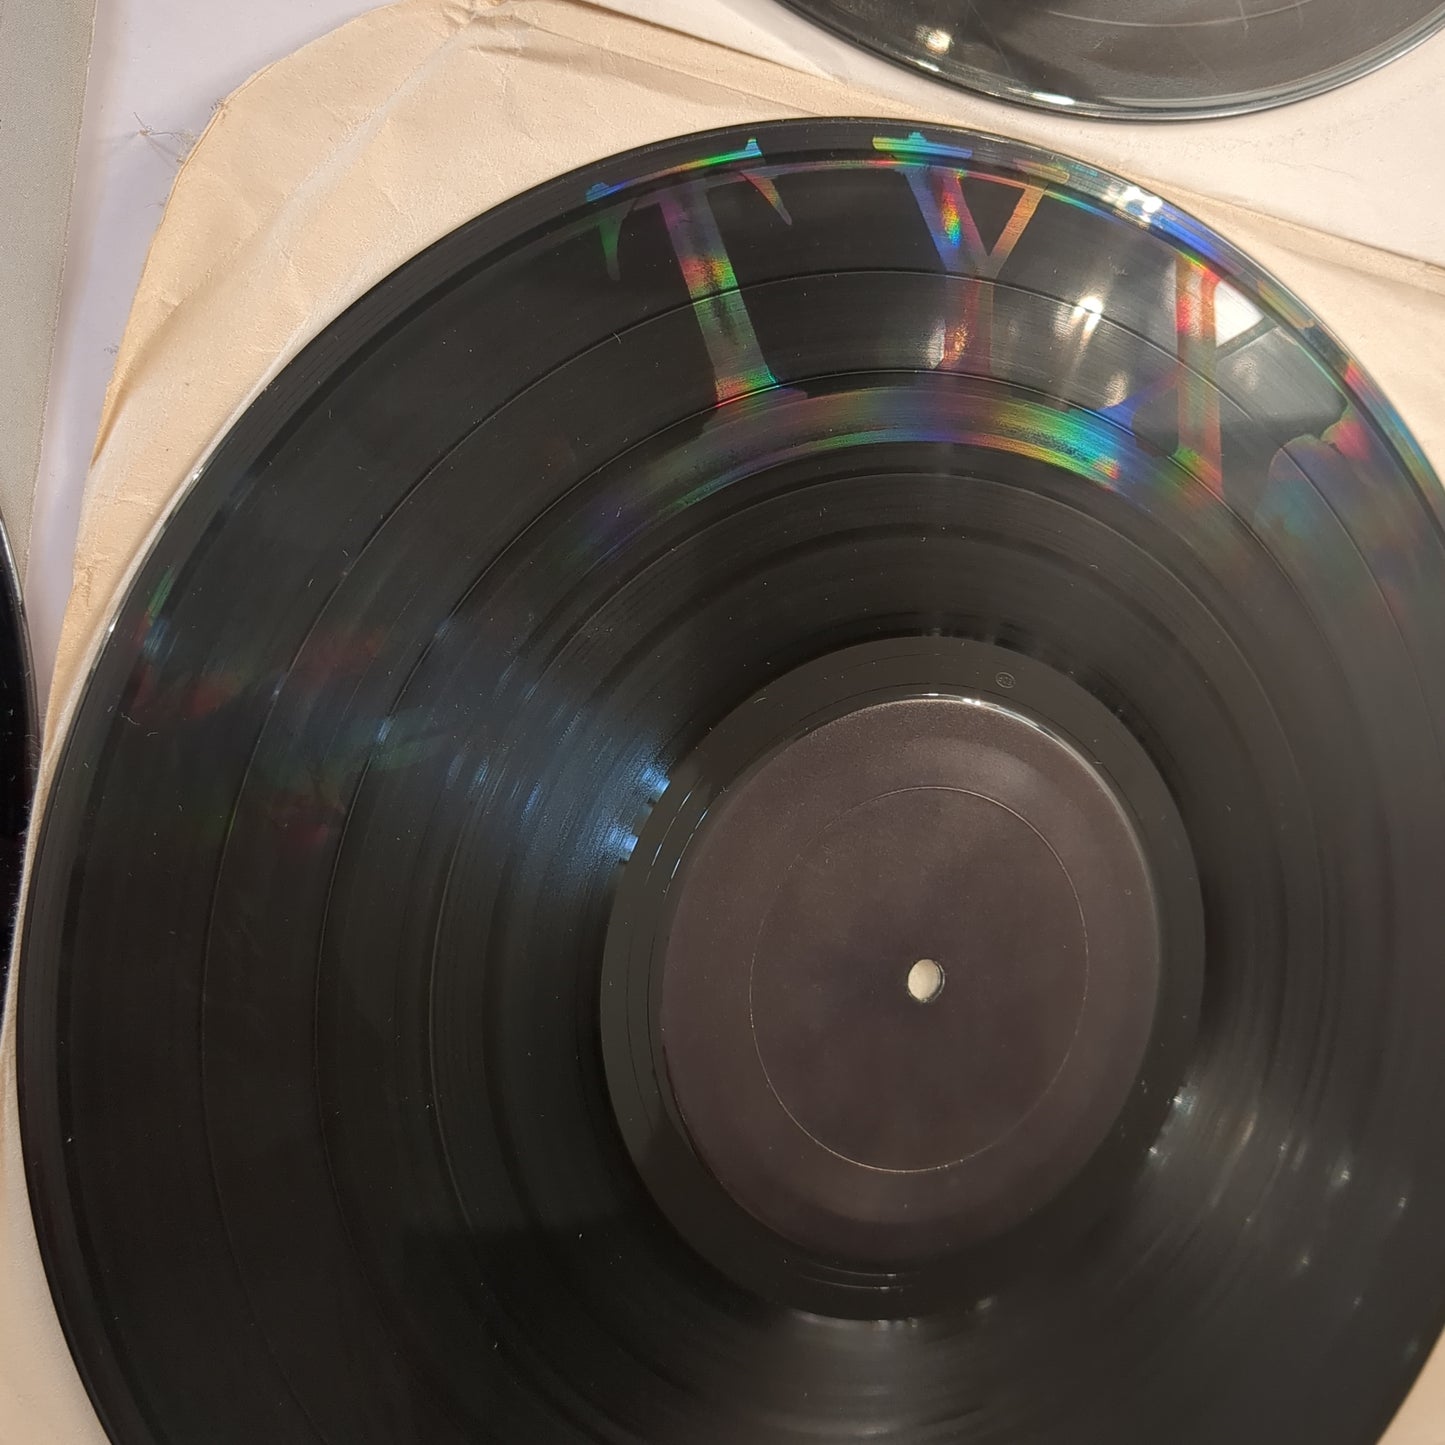 Sleeveless Vinyl Bundle (Styx, Alice Cooper, Billy Joel)